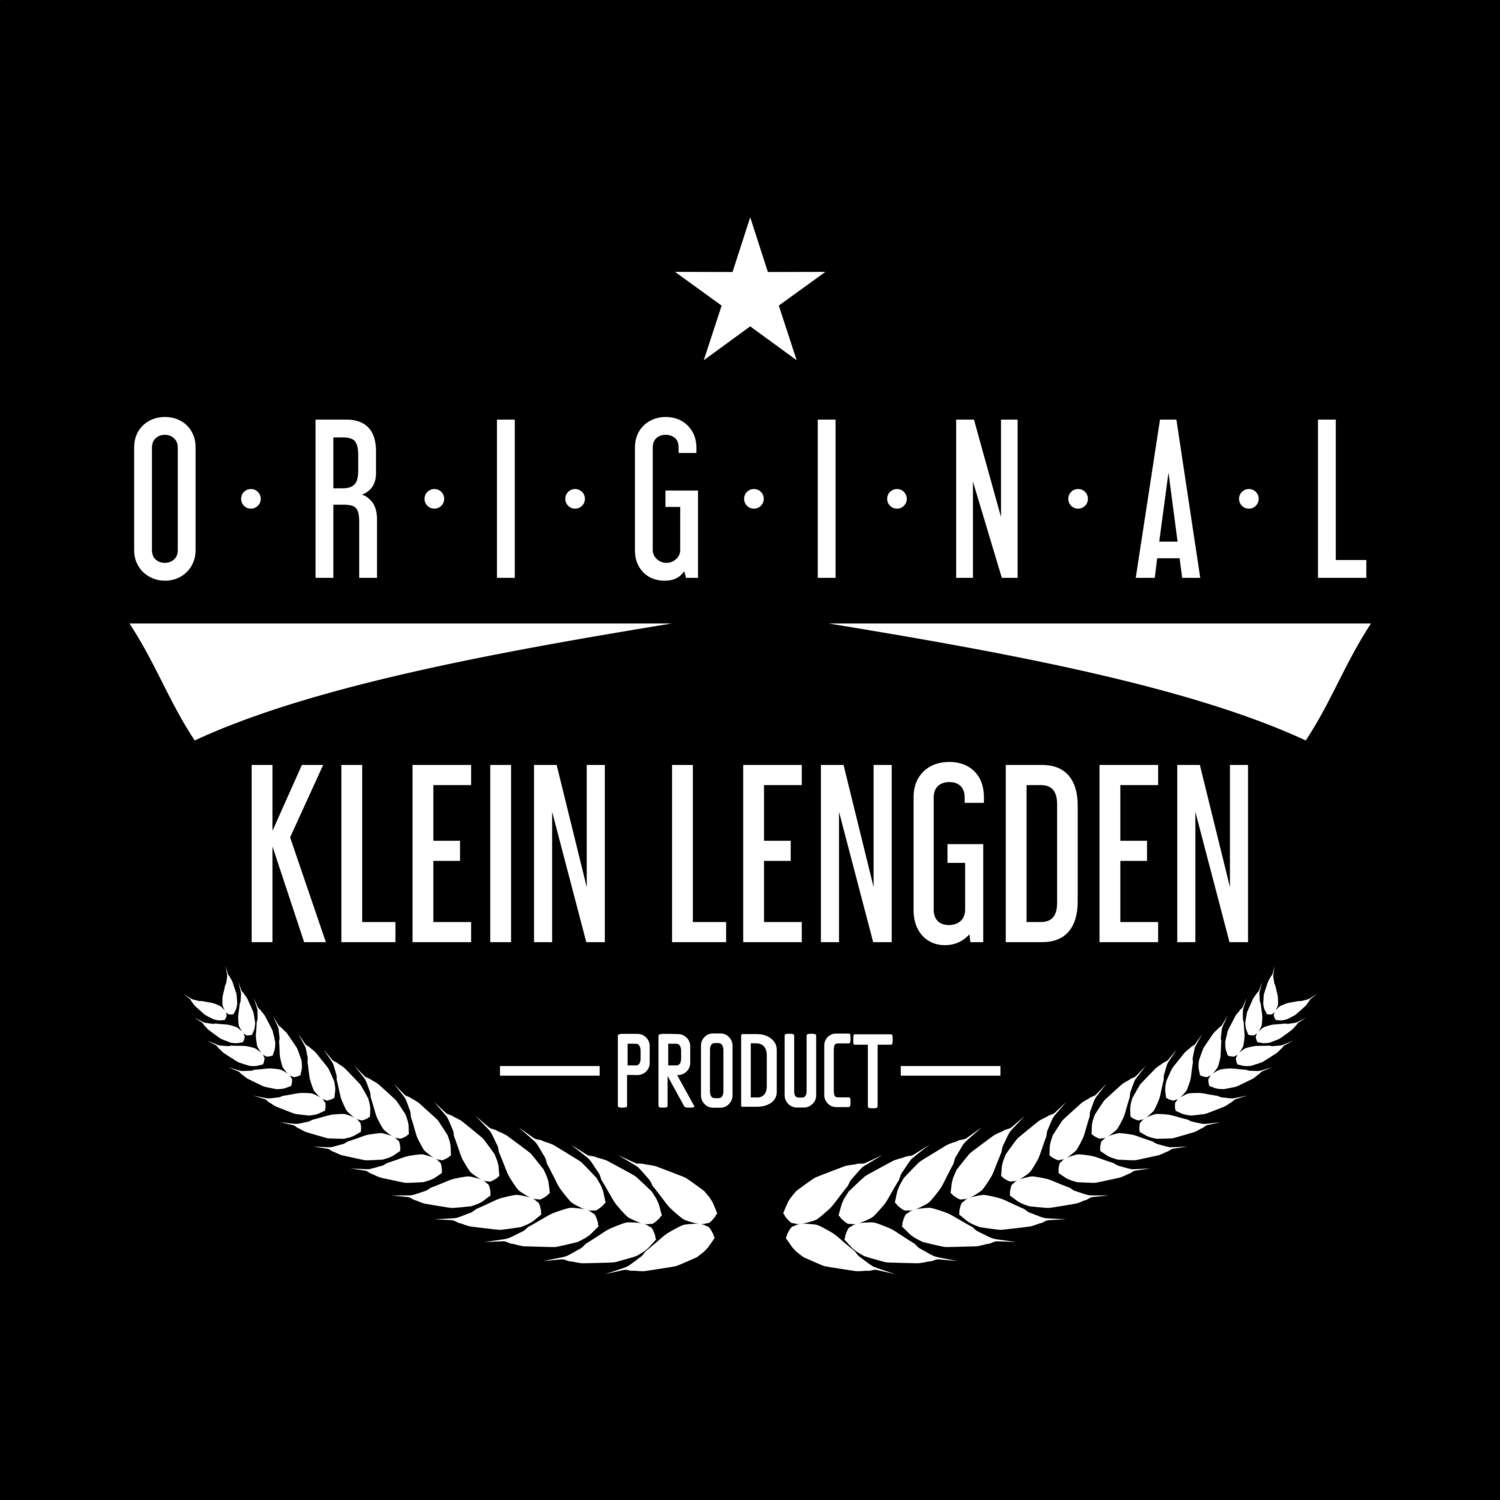 Klein Lengden T-Shirt »Original Product«